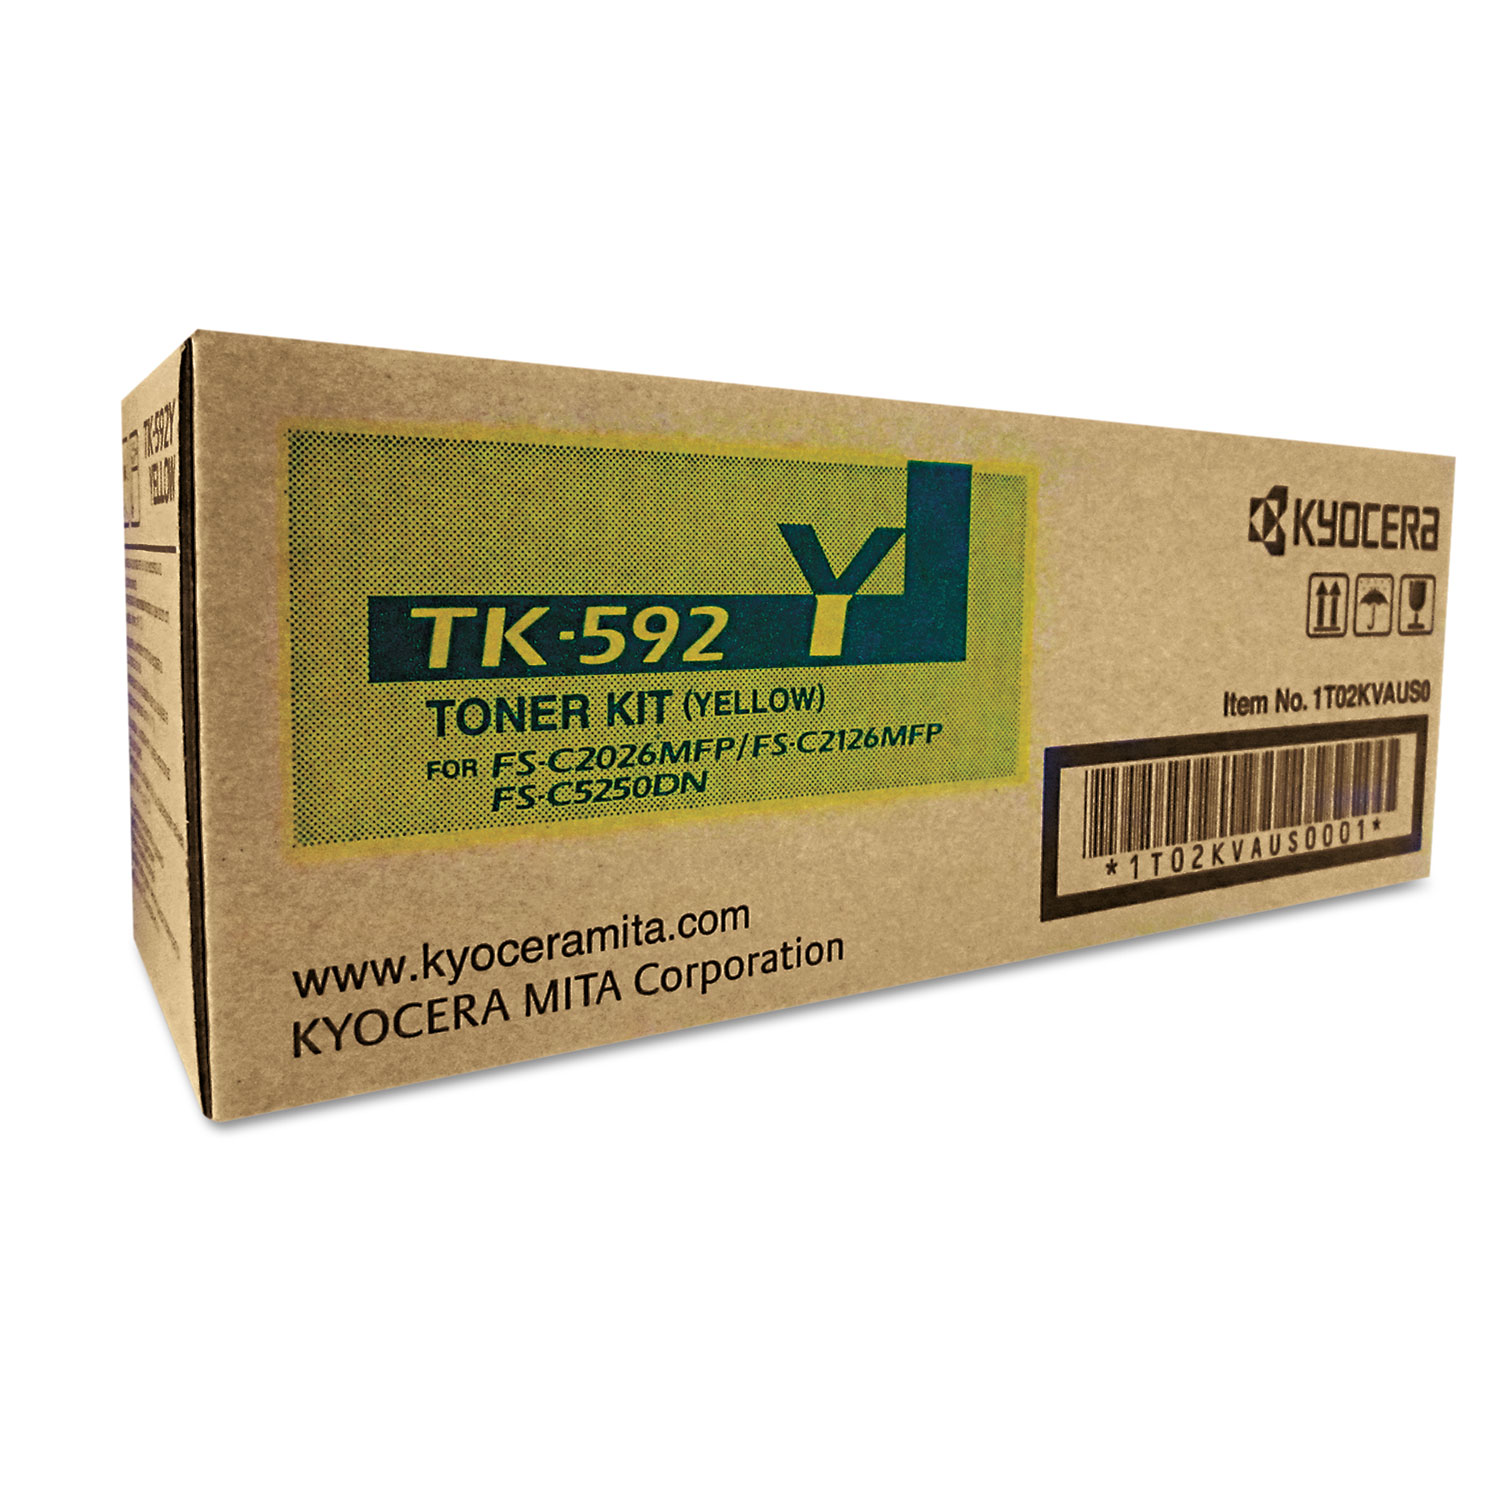  Kyocera TK592Y TK592Y Toner, 7000 Page-Yield, Yellow (KYOTK592Y) 